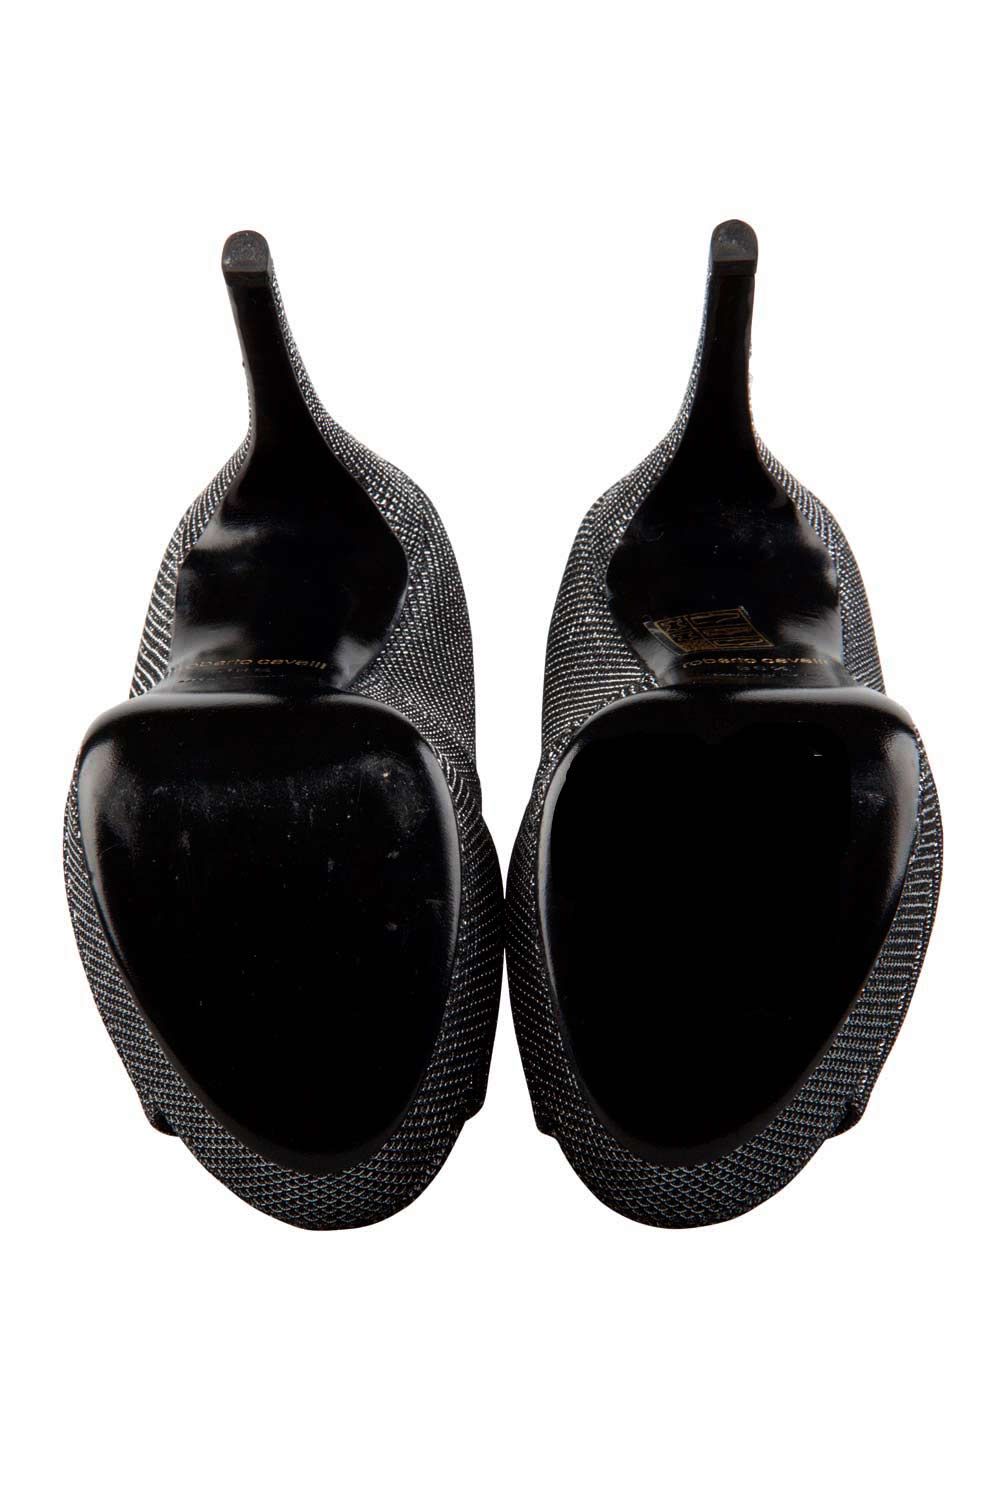 Pre-owned Roberto Cavalli Metallic Silver/black Glitter Peep Toe Platform Pumps Size 36.5